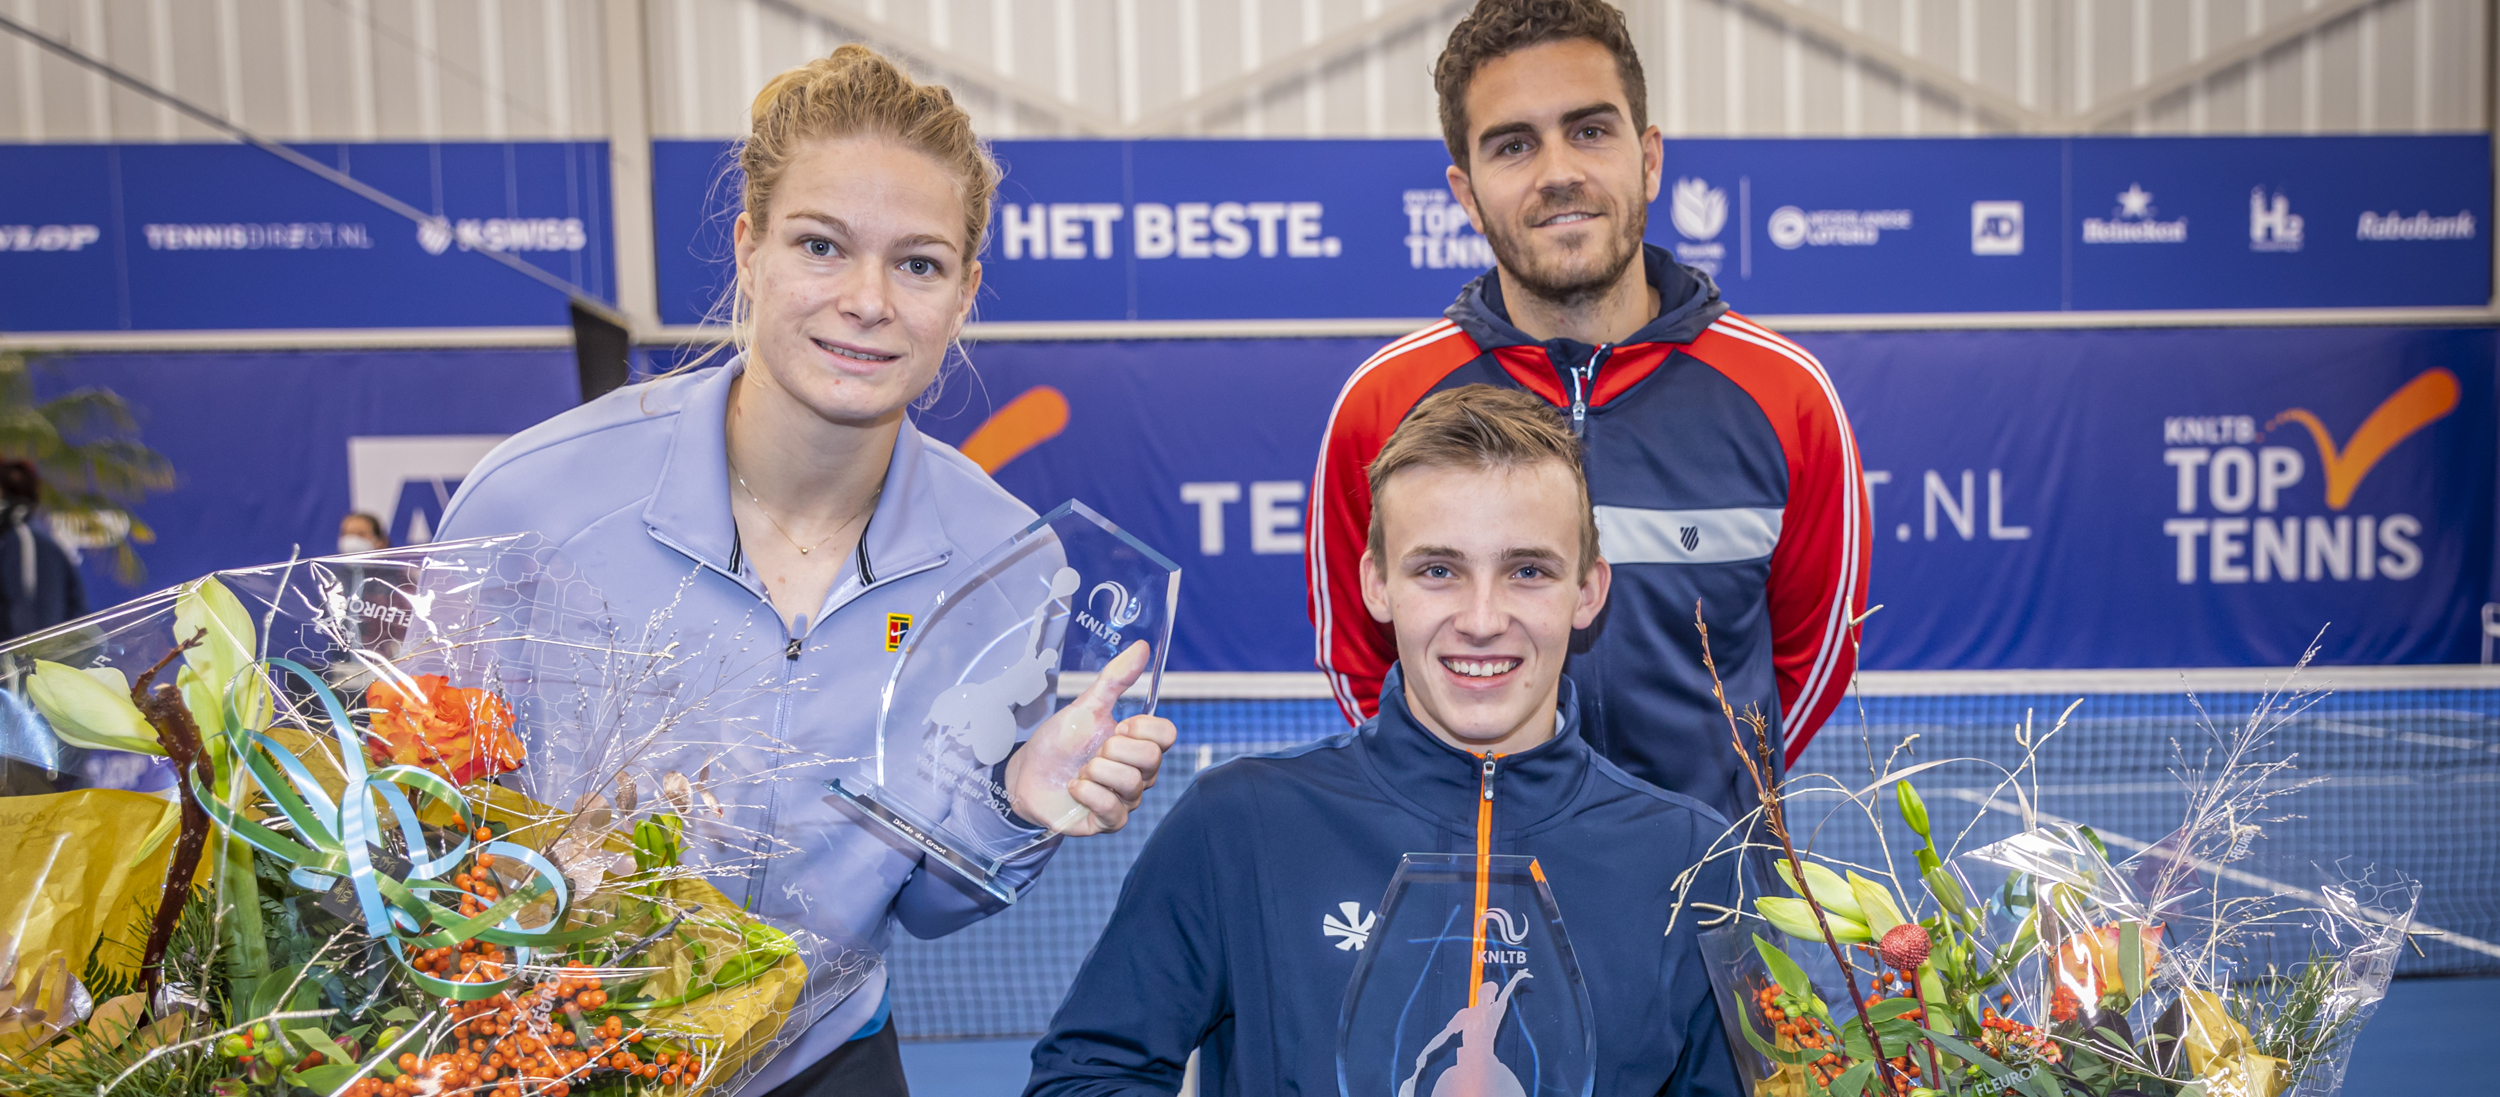 KNLTB Tennis Awards 2021 Rolstoel Ter Hofte Diede de Groot